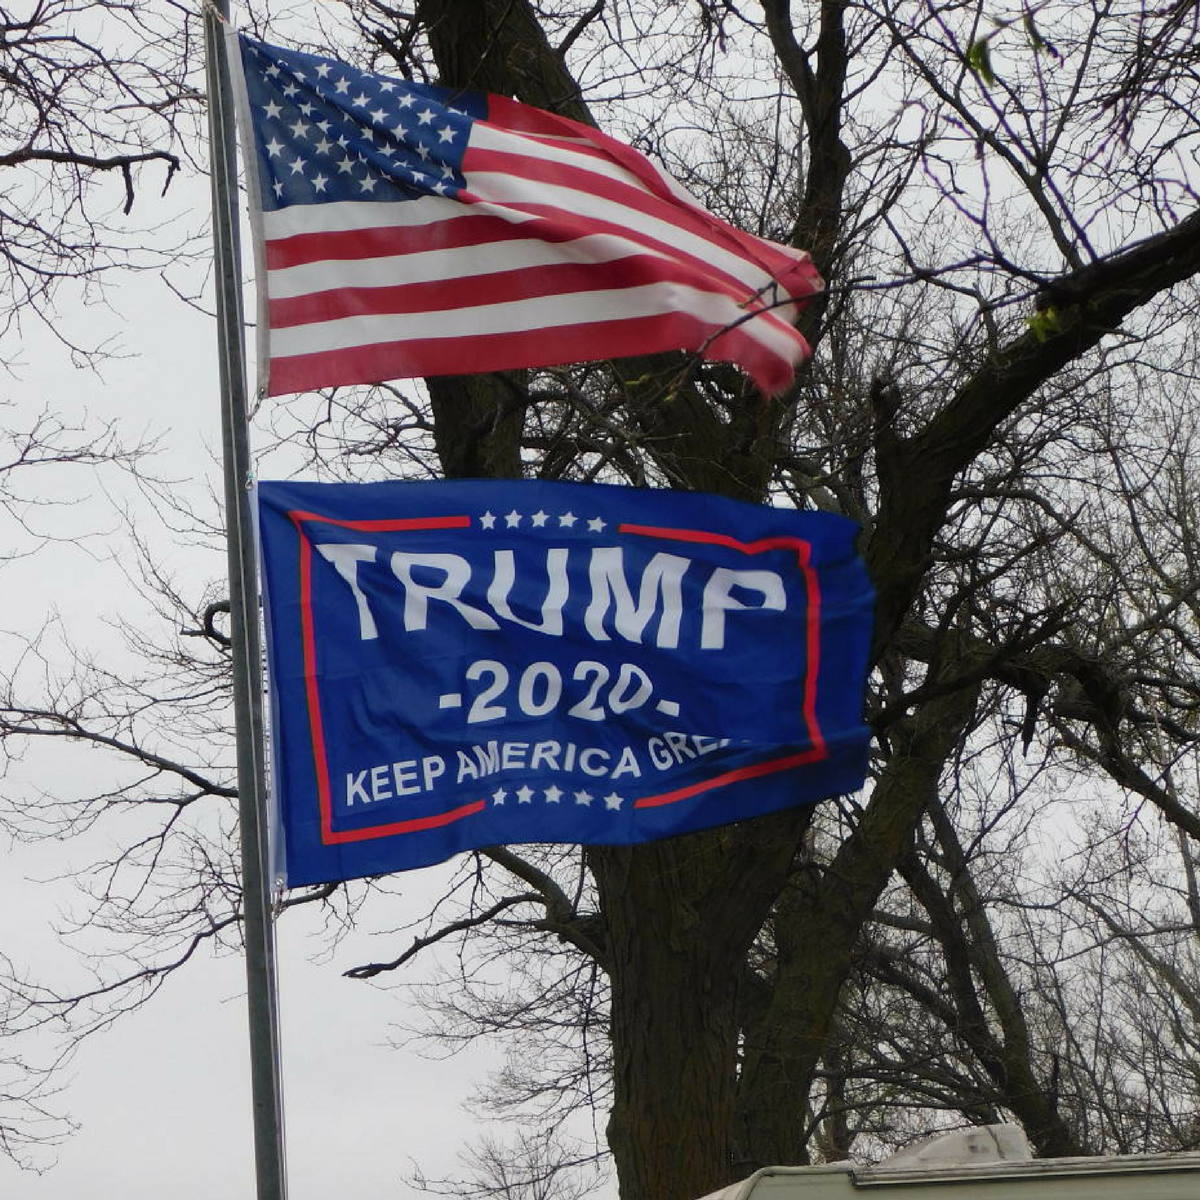 Trump 2020 Flags - 3 x 5 ft